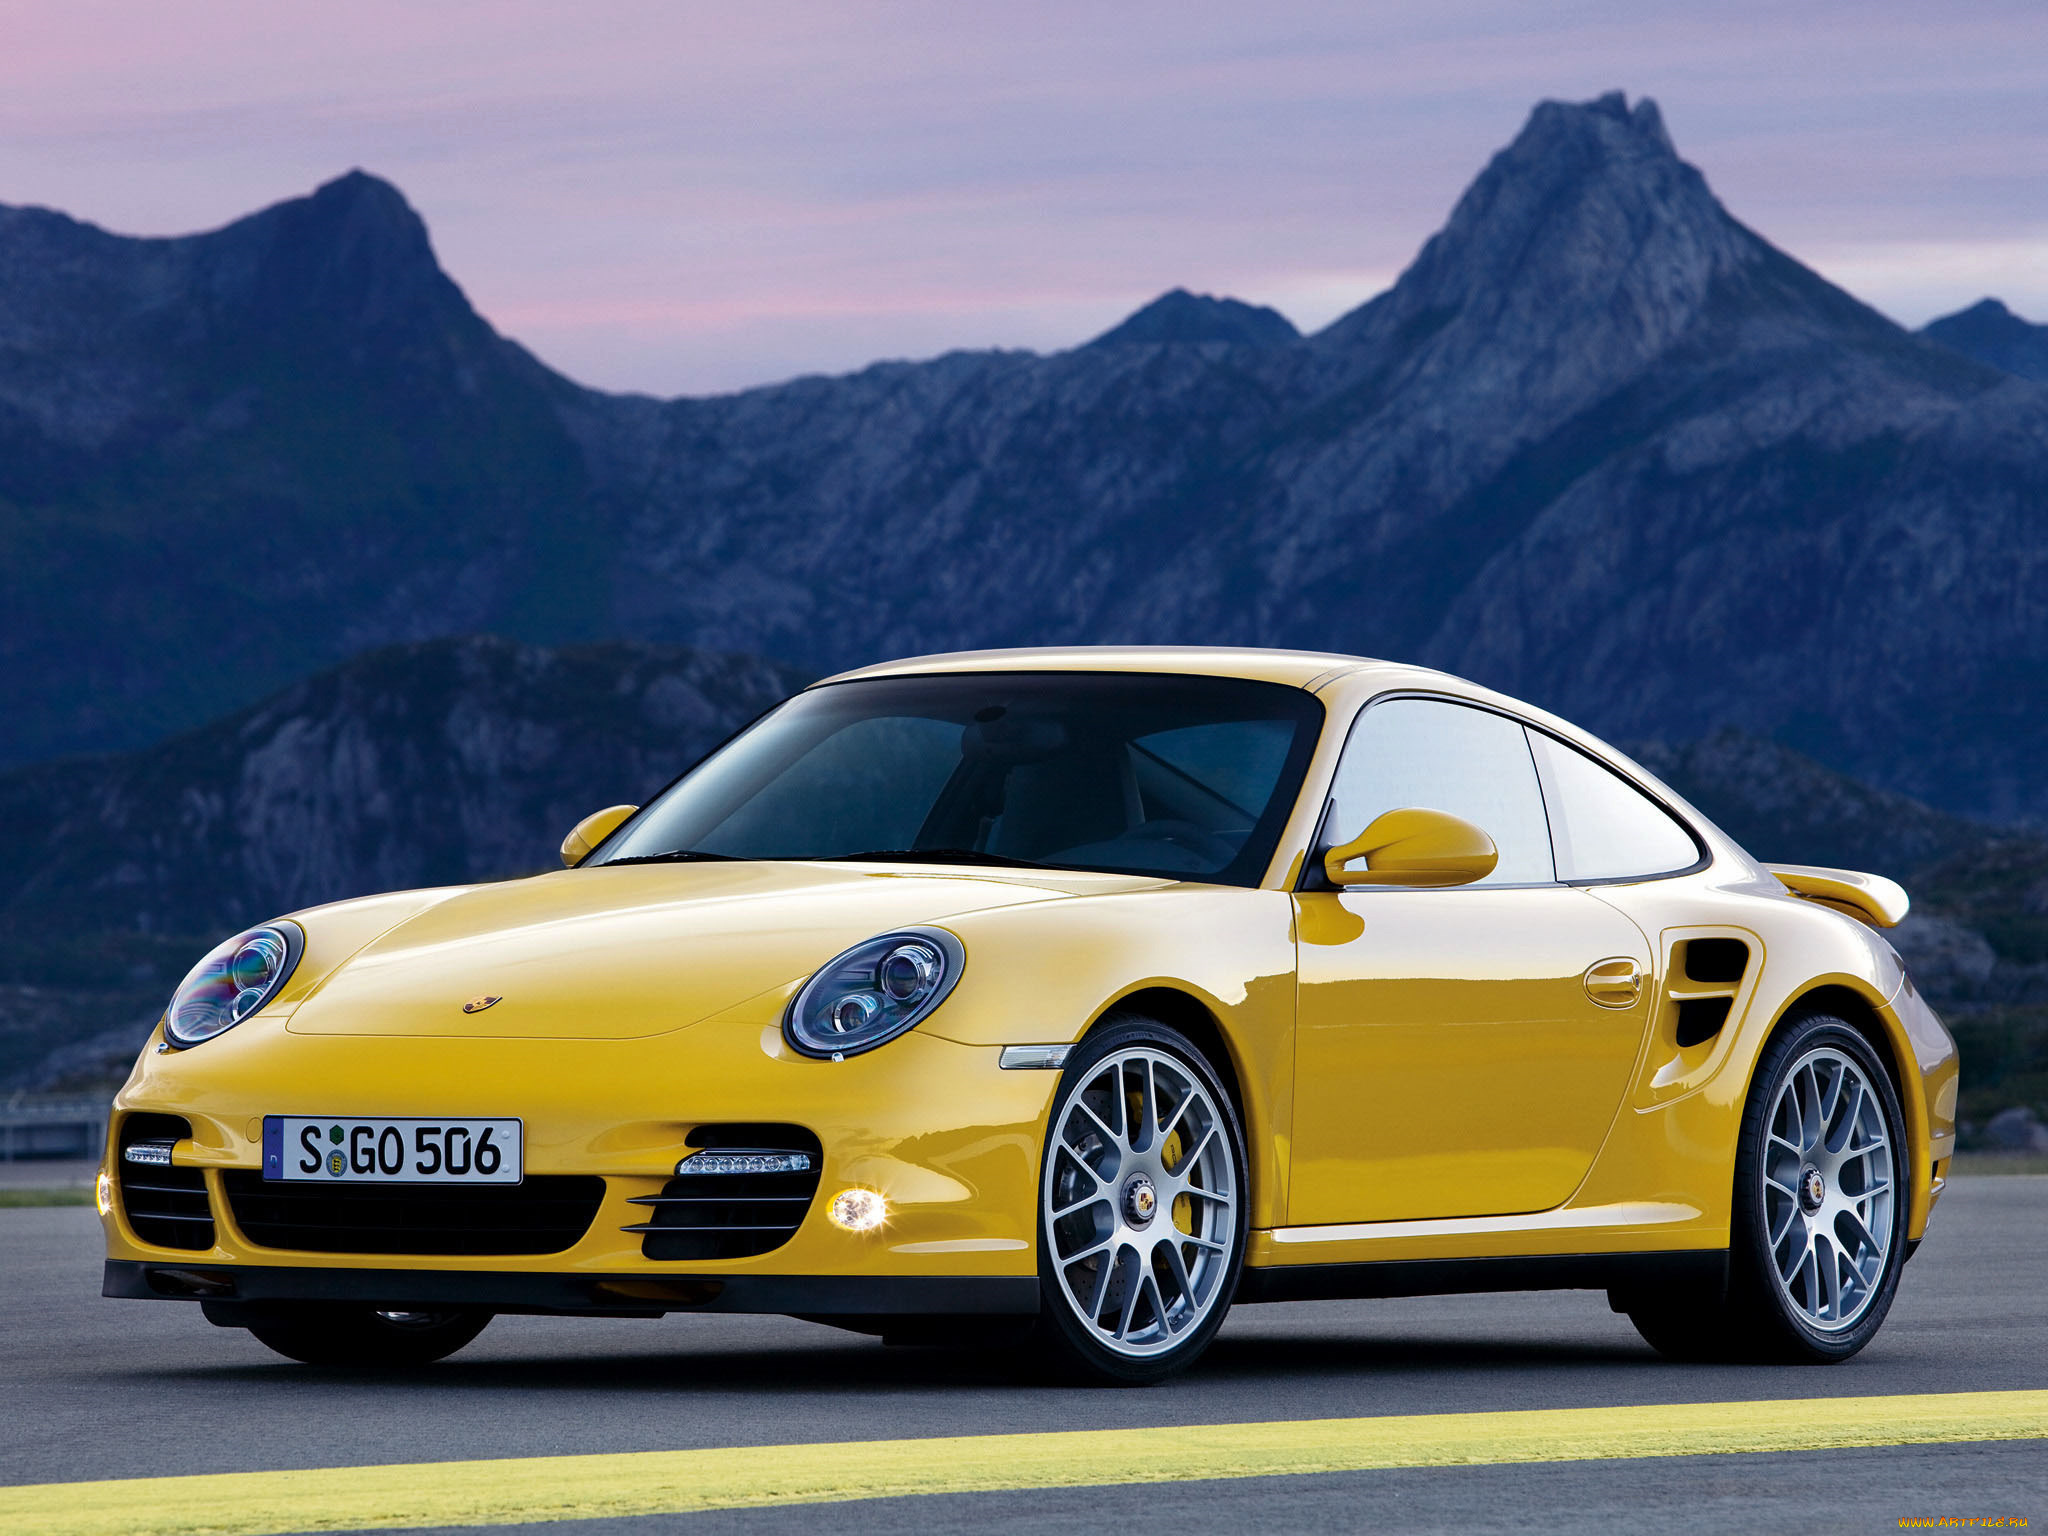 Порше зверобой. Порше 911 желтый. Порше 911 турбо с. Порше 911 турбо 2009. Porsche 911 Turbo.